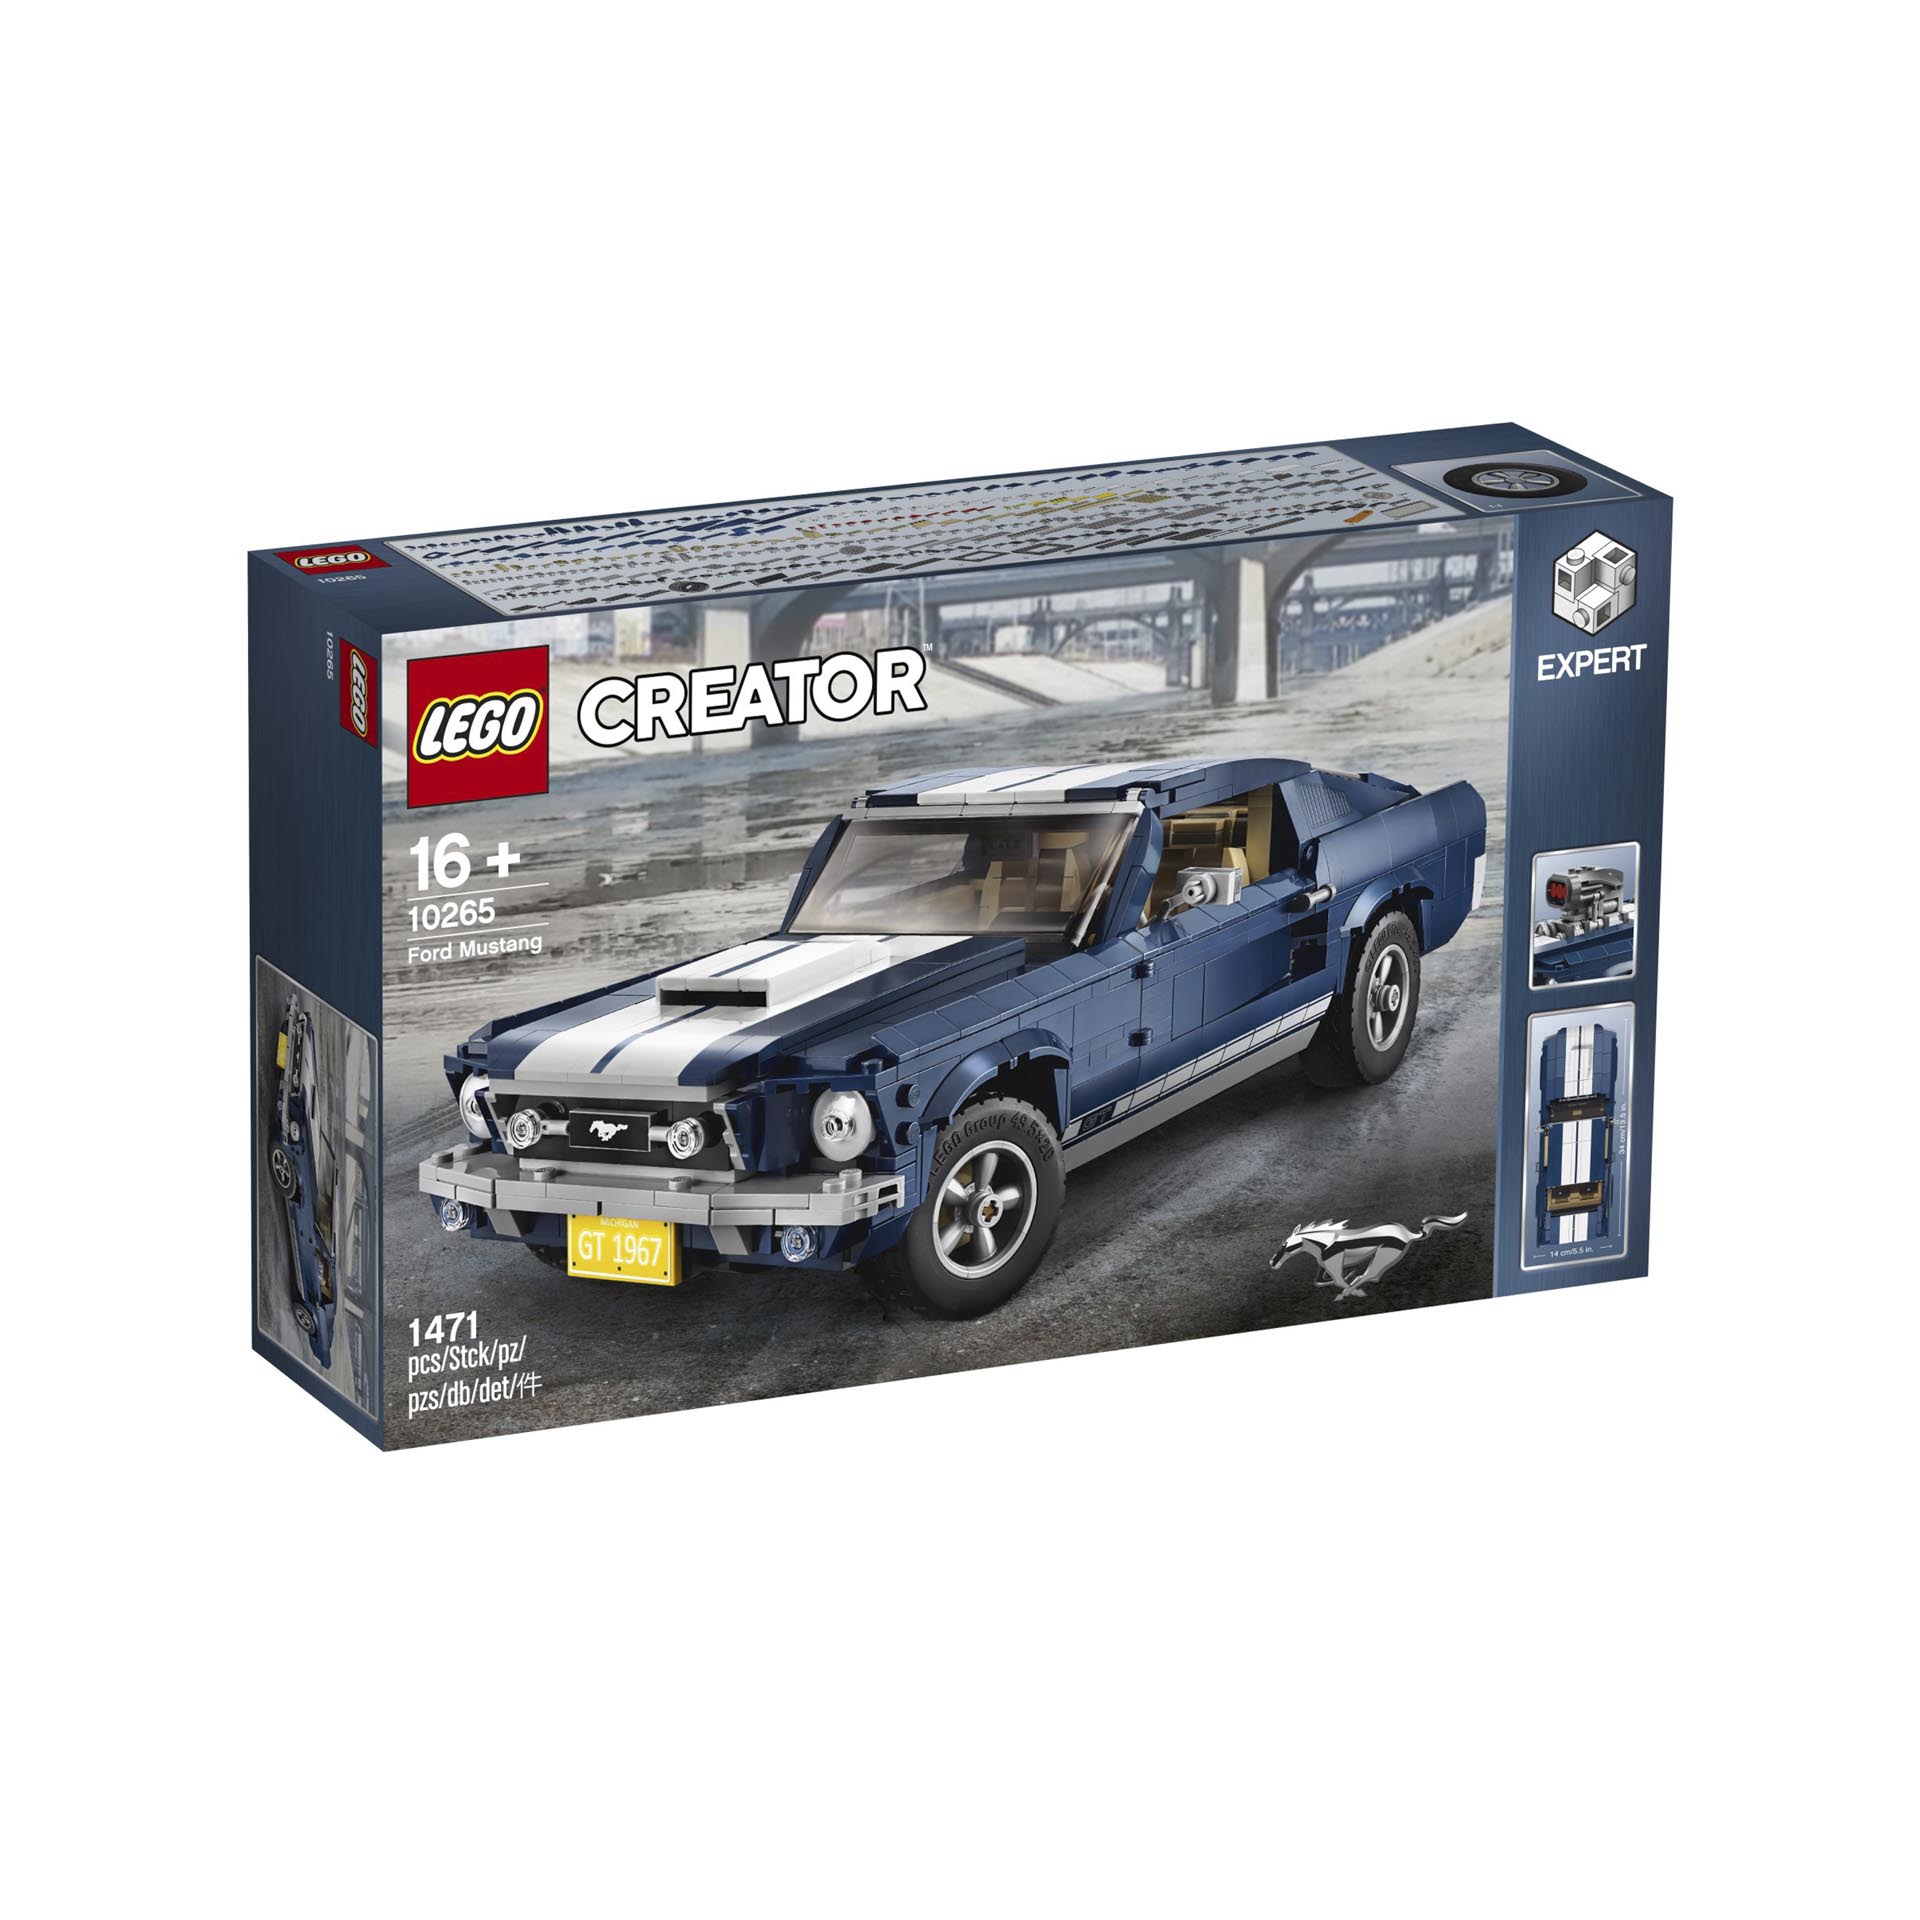 Kit Di Costruzione Ford Mustang Lego Creator Expert 10265 (1.470 Pezzi) 10265, , large